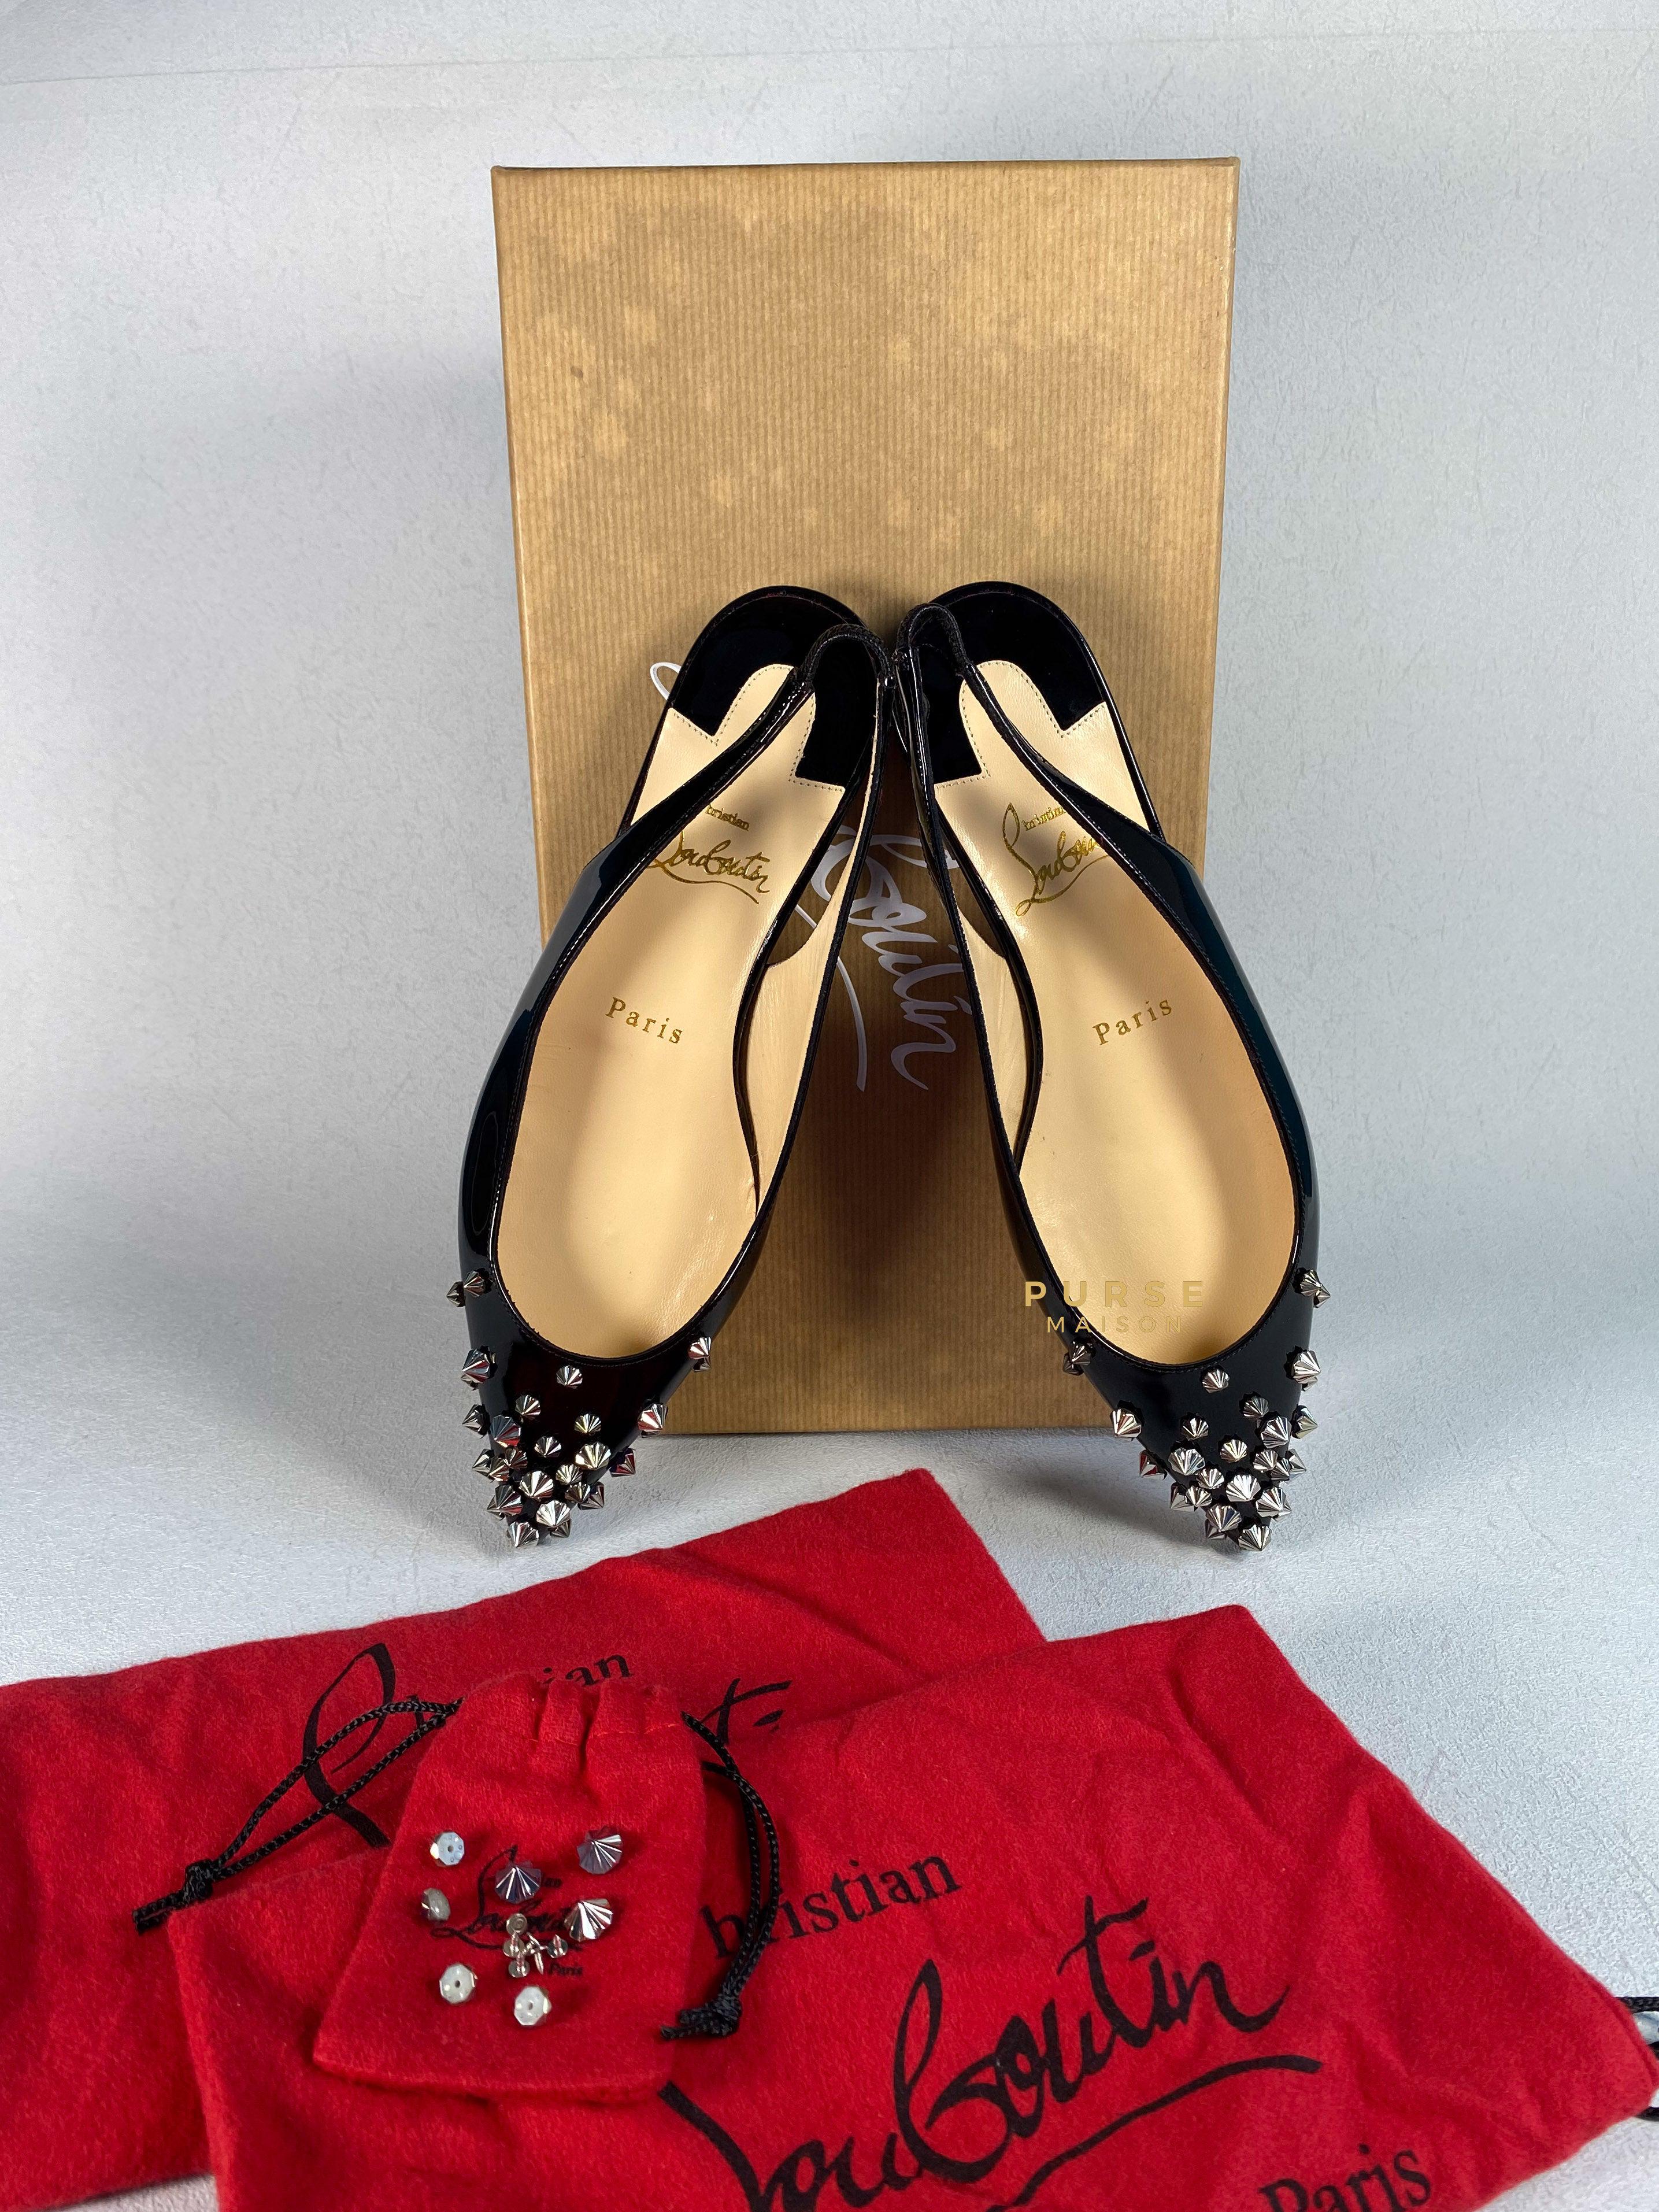 Christian Louboutin Drama Sling Flat Patent Black/Silver Size 36 | Purse Maison Luxury Bags Shop